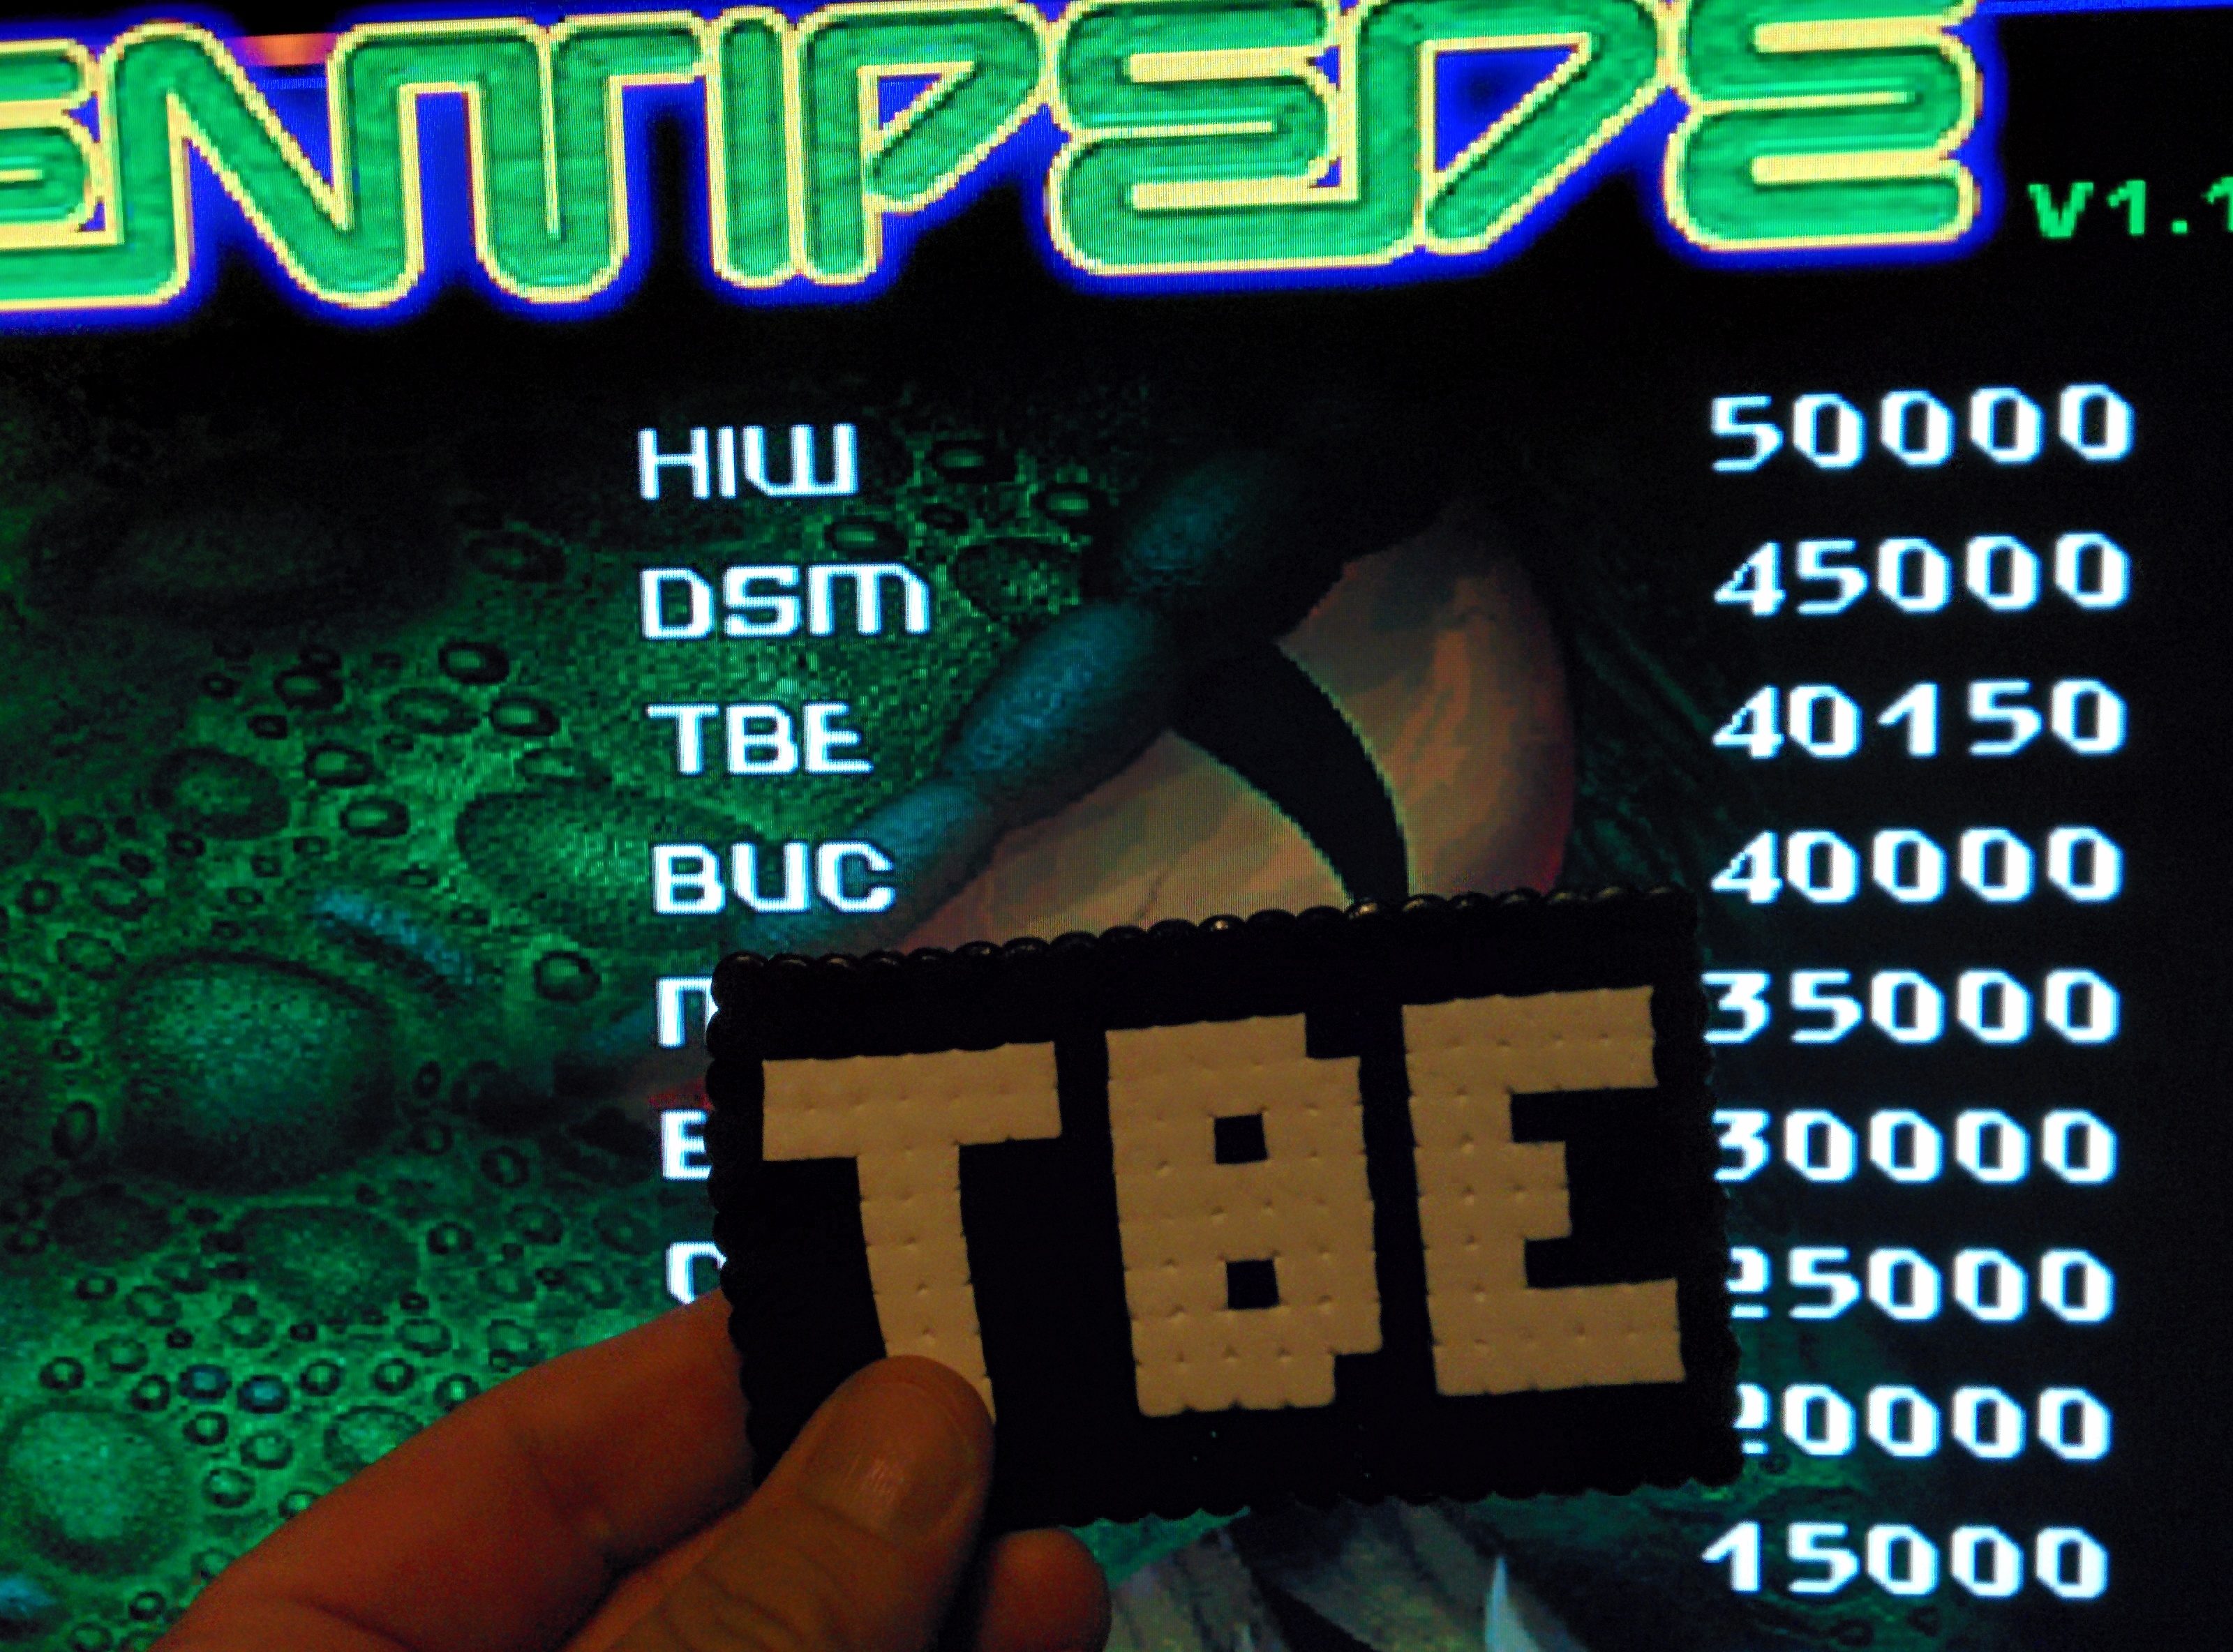 Sixx: Centipede: Arcade Mode [1998 Version] (PC) 40,150 points on 2014-08-22 16:29:06